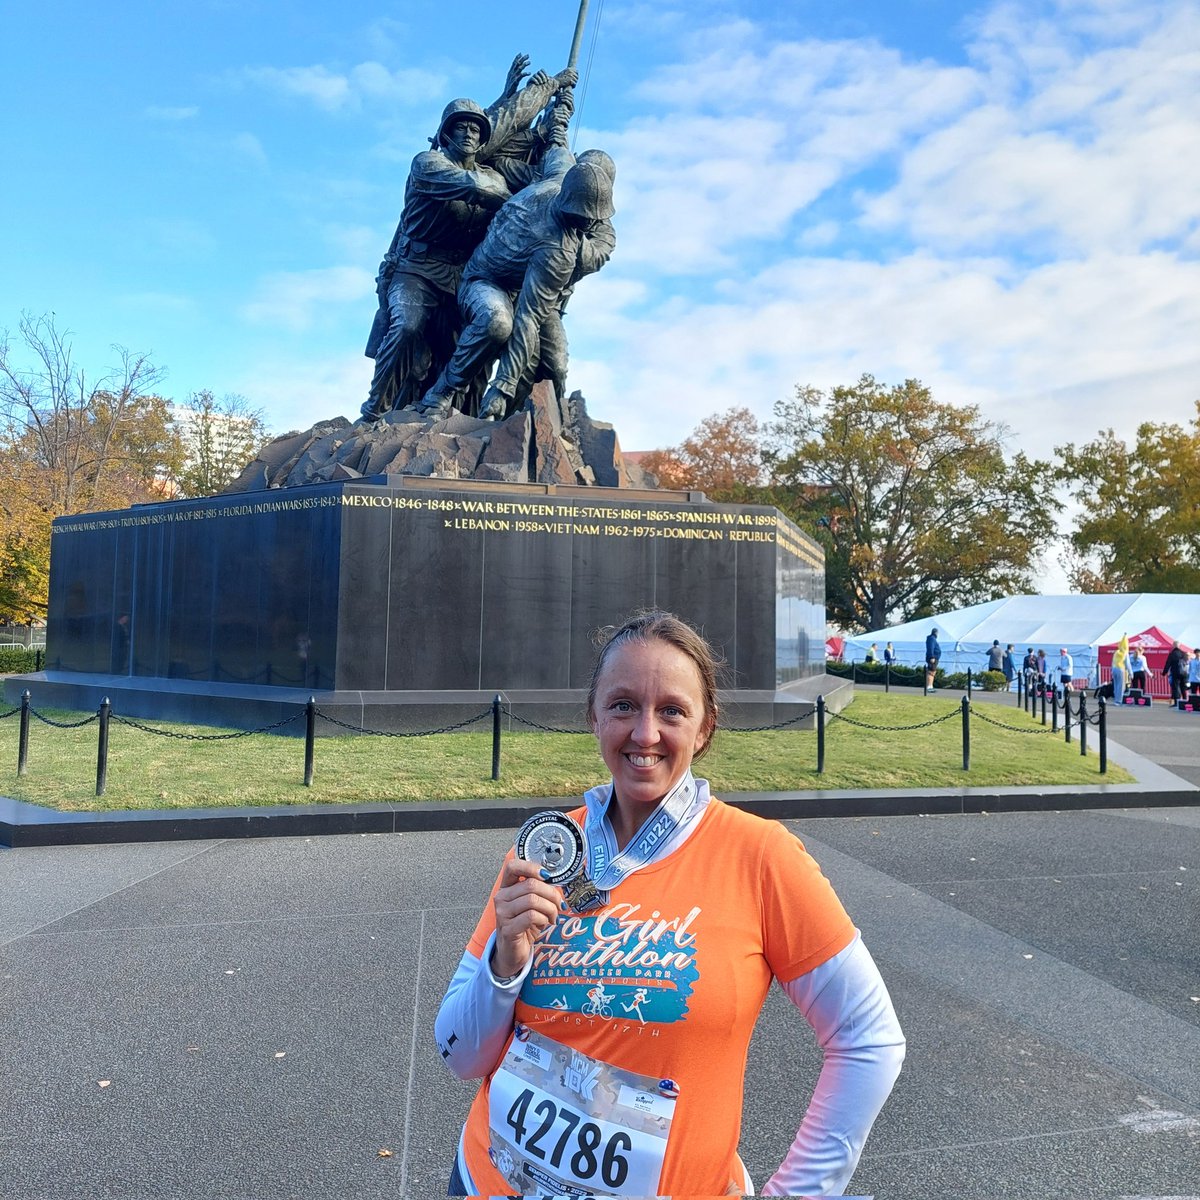 #NewProfilePic #runwiththemarines @Marine_Marathon #10k
Had an amazing race. 10/10 Would definitely run again. #runchat #bibchat #runnersoftwitter #womensrunningcommunity